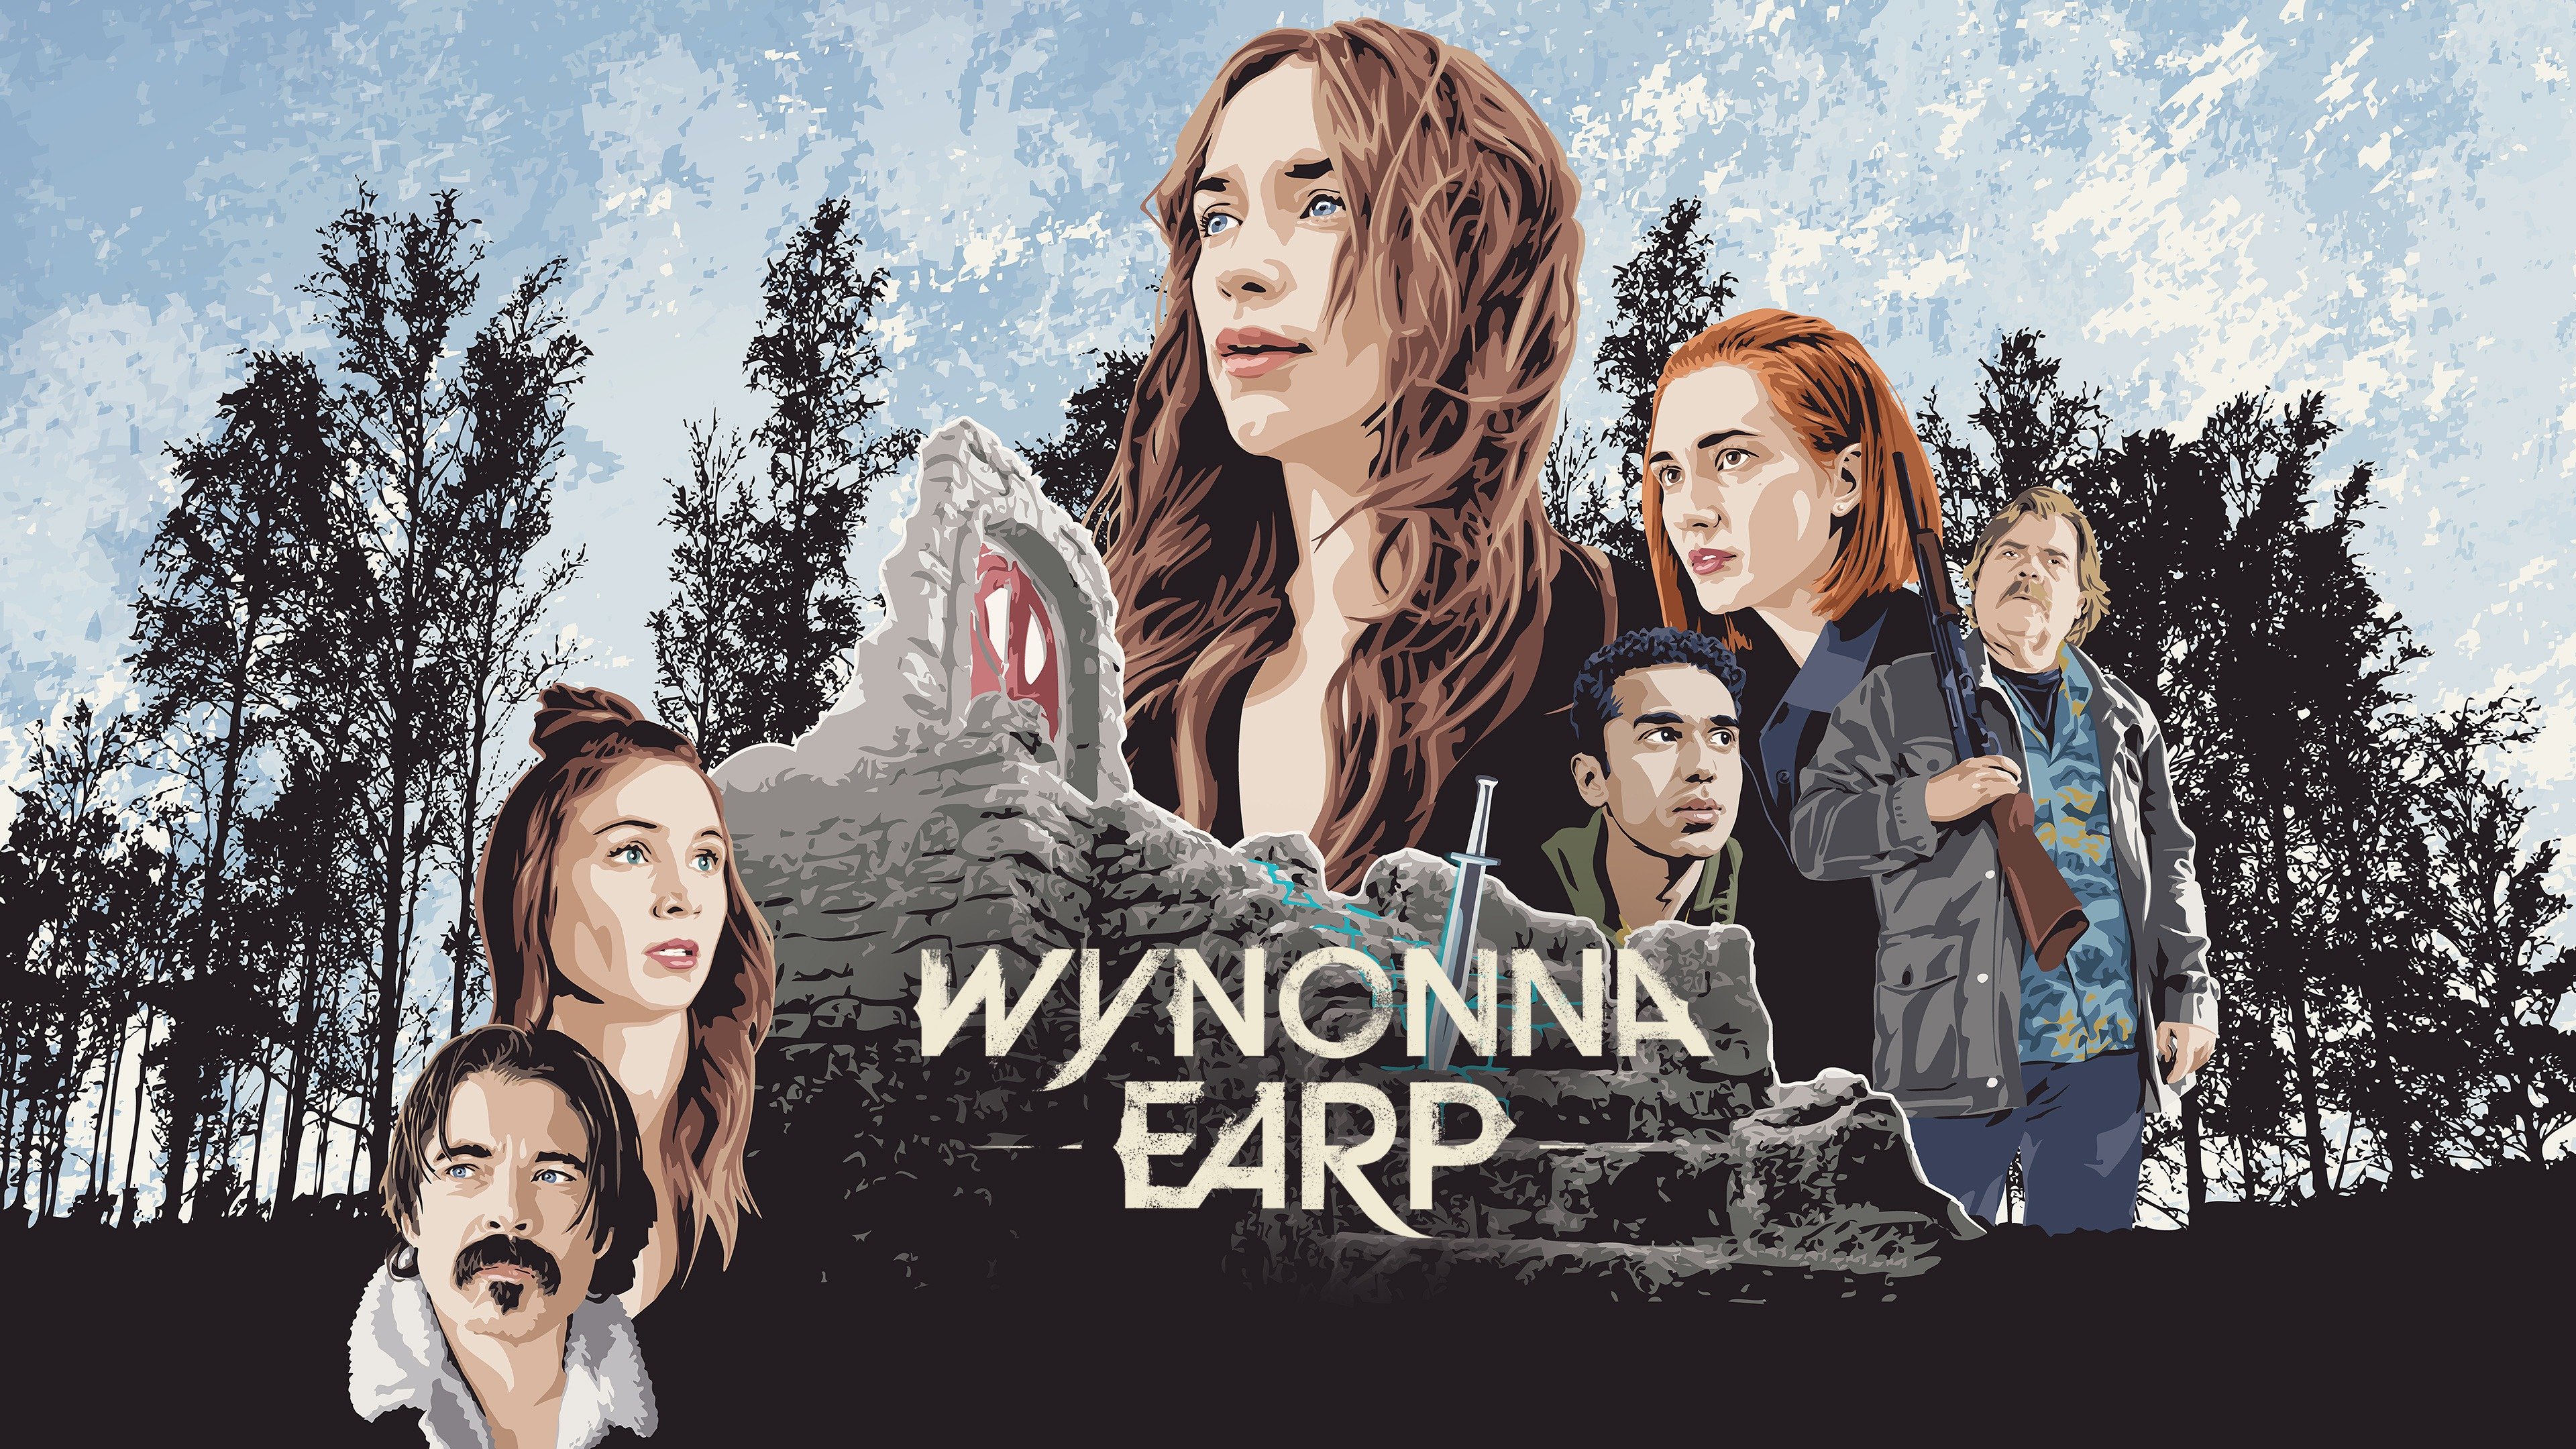 cast of wynonna earp season 1